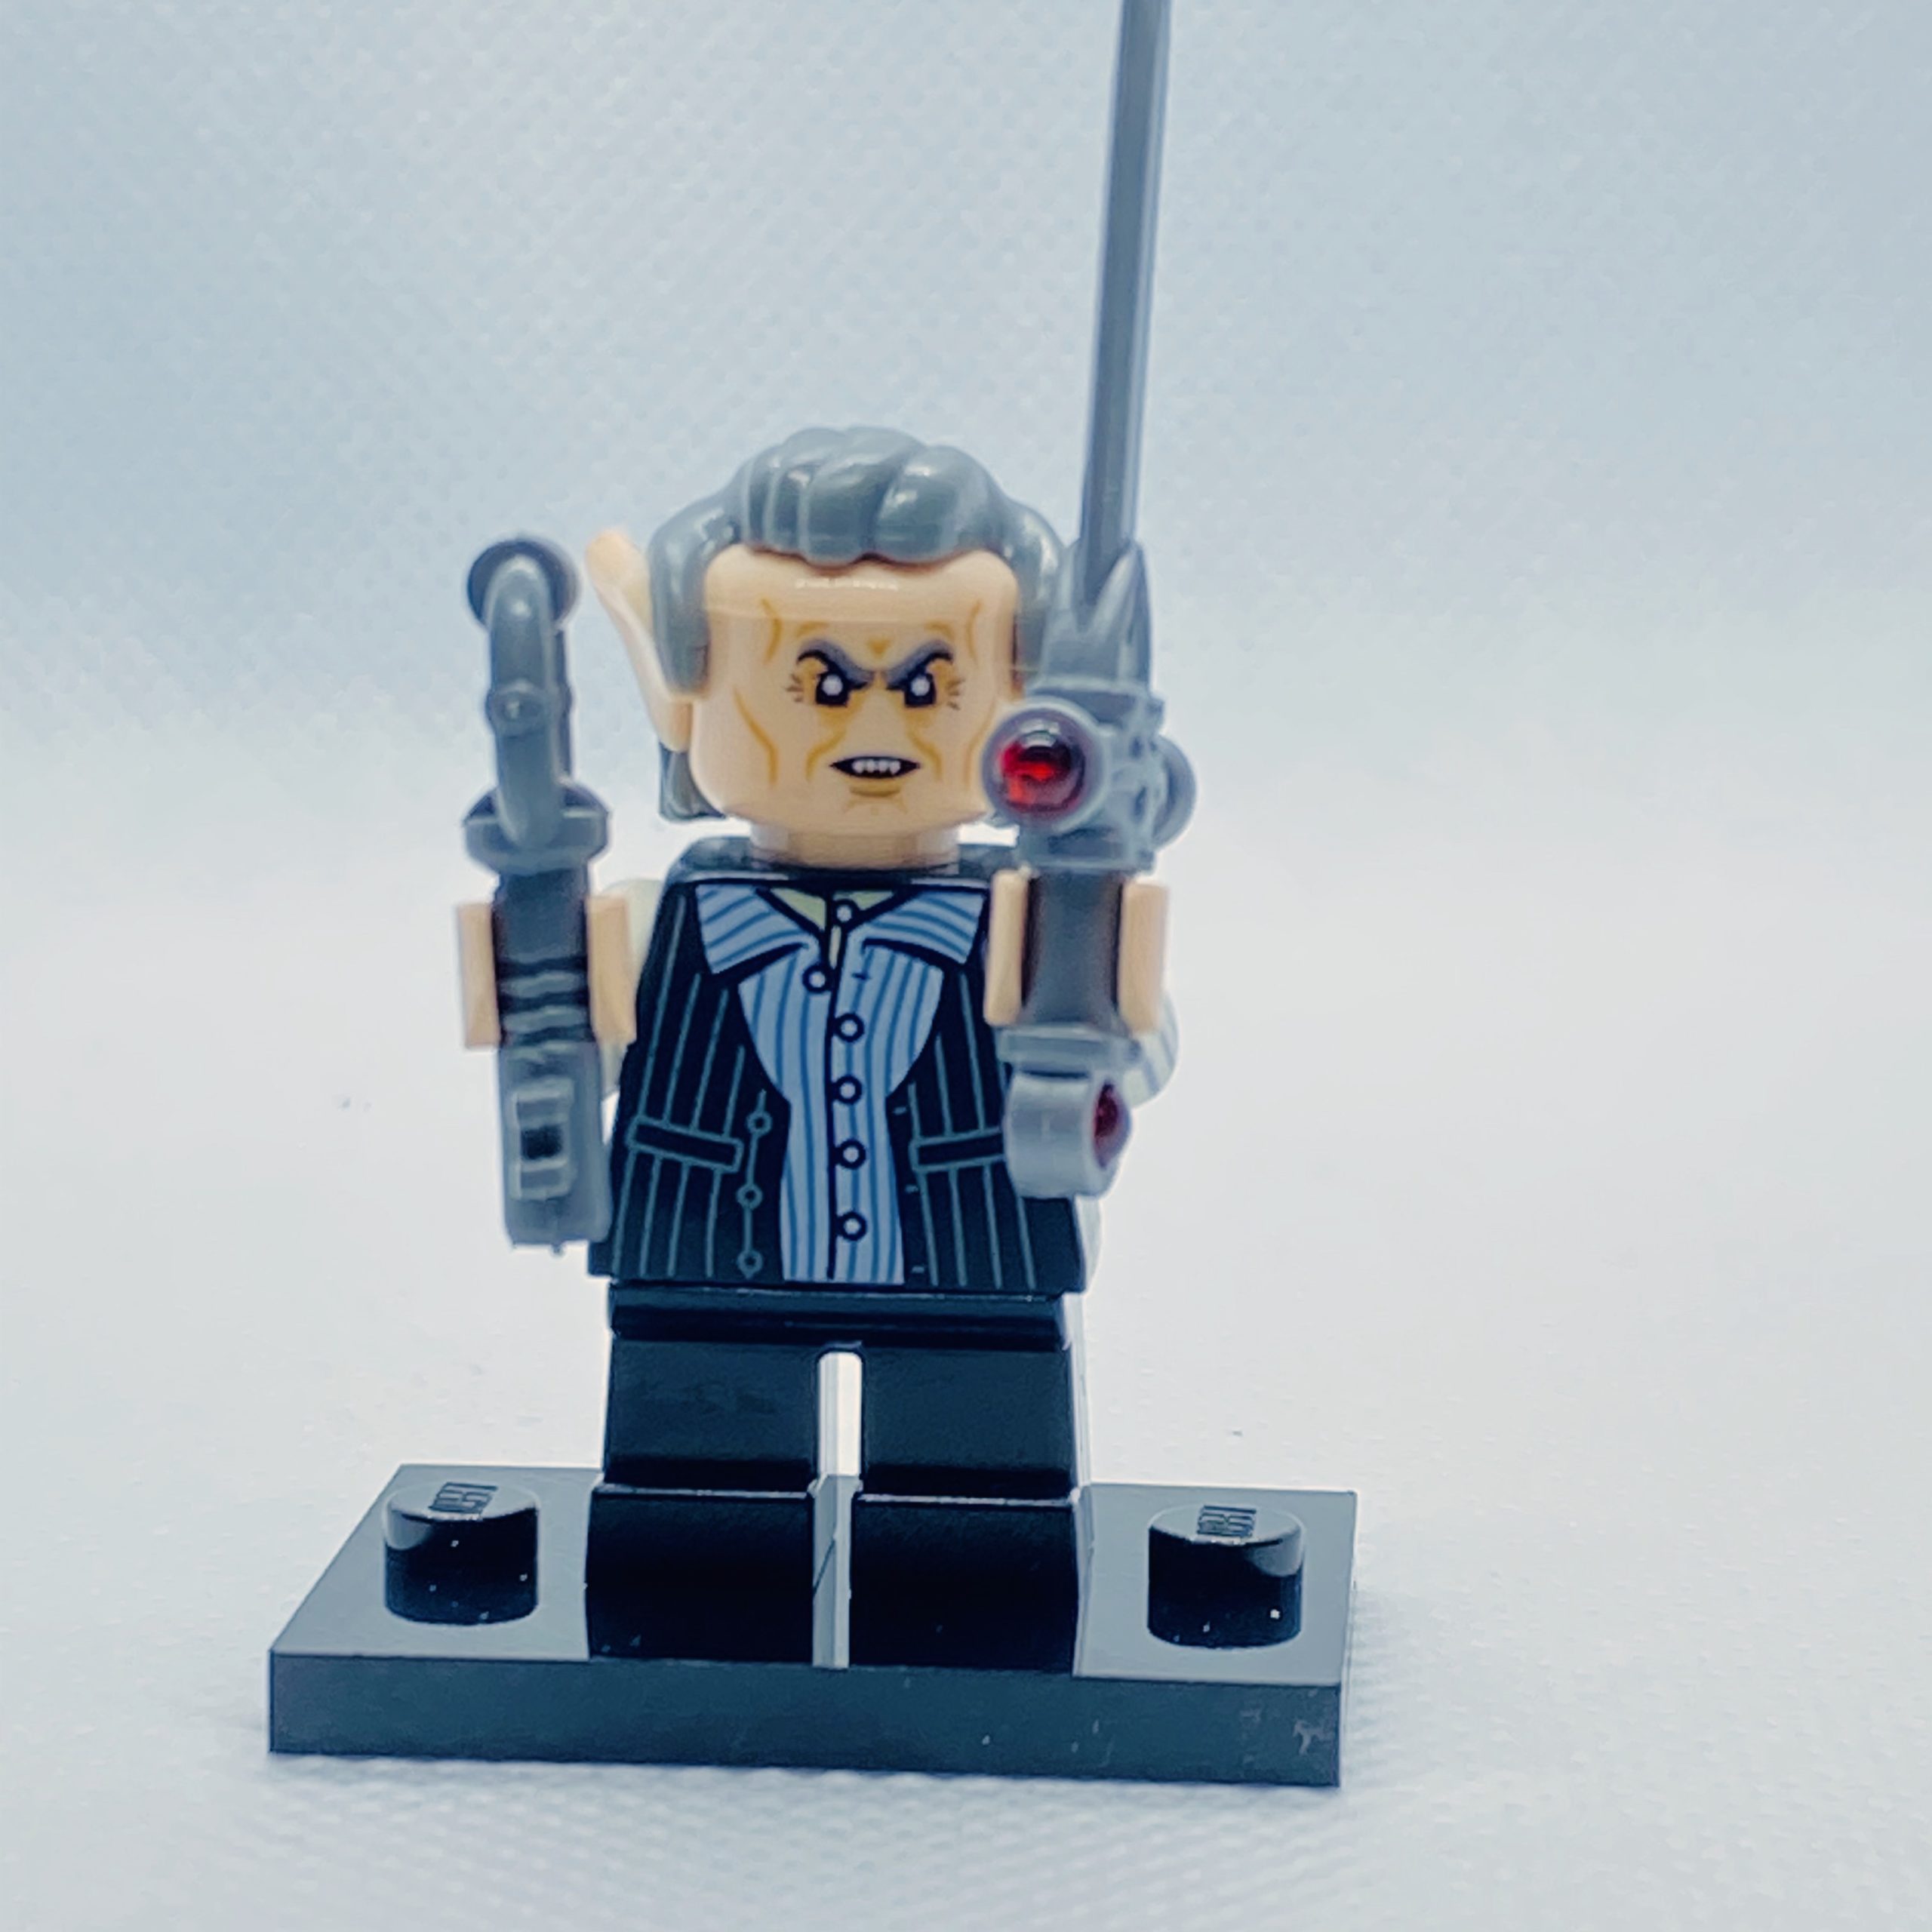 I/H New 2020 Lego 71028 Harry Potter Series 2 Griphook Minifigure